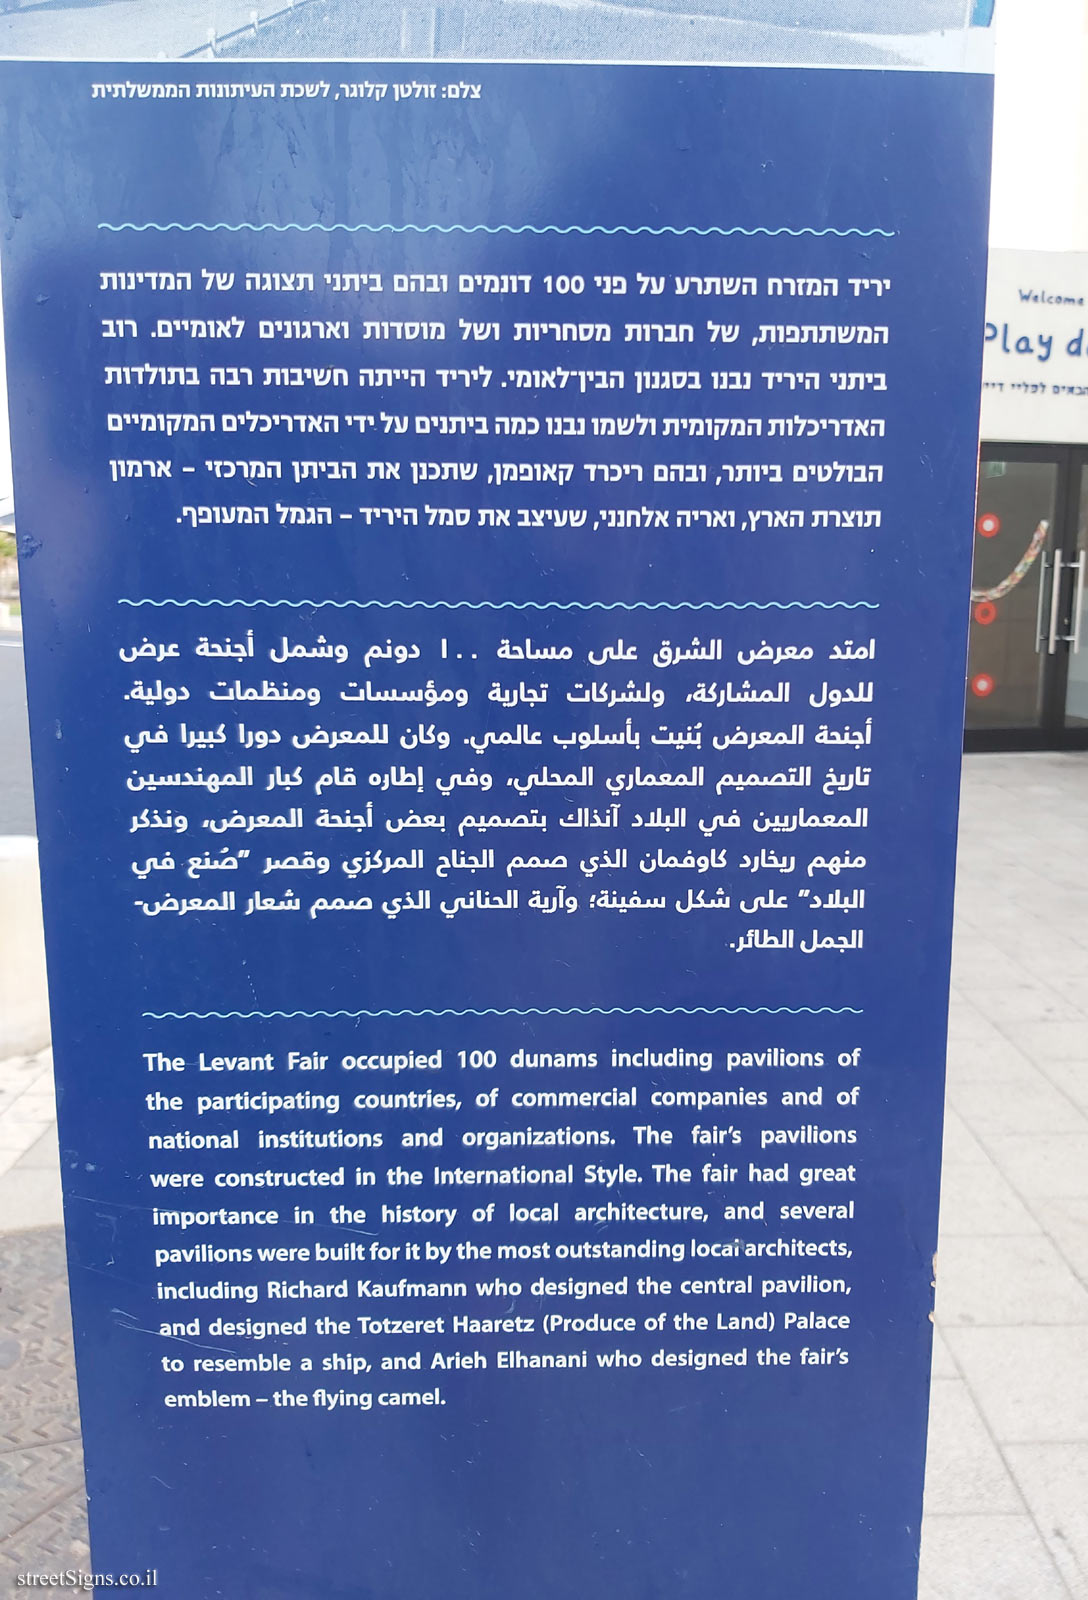 Tel Aviv - Levant Fair - About the Fair